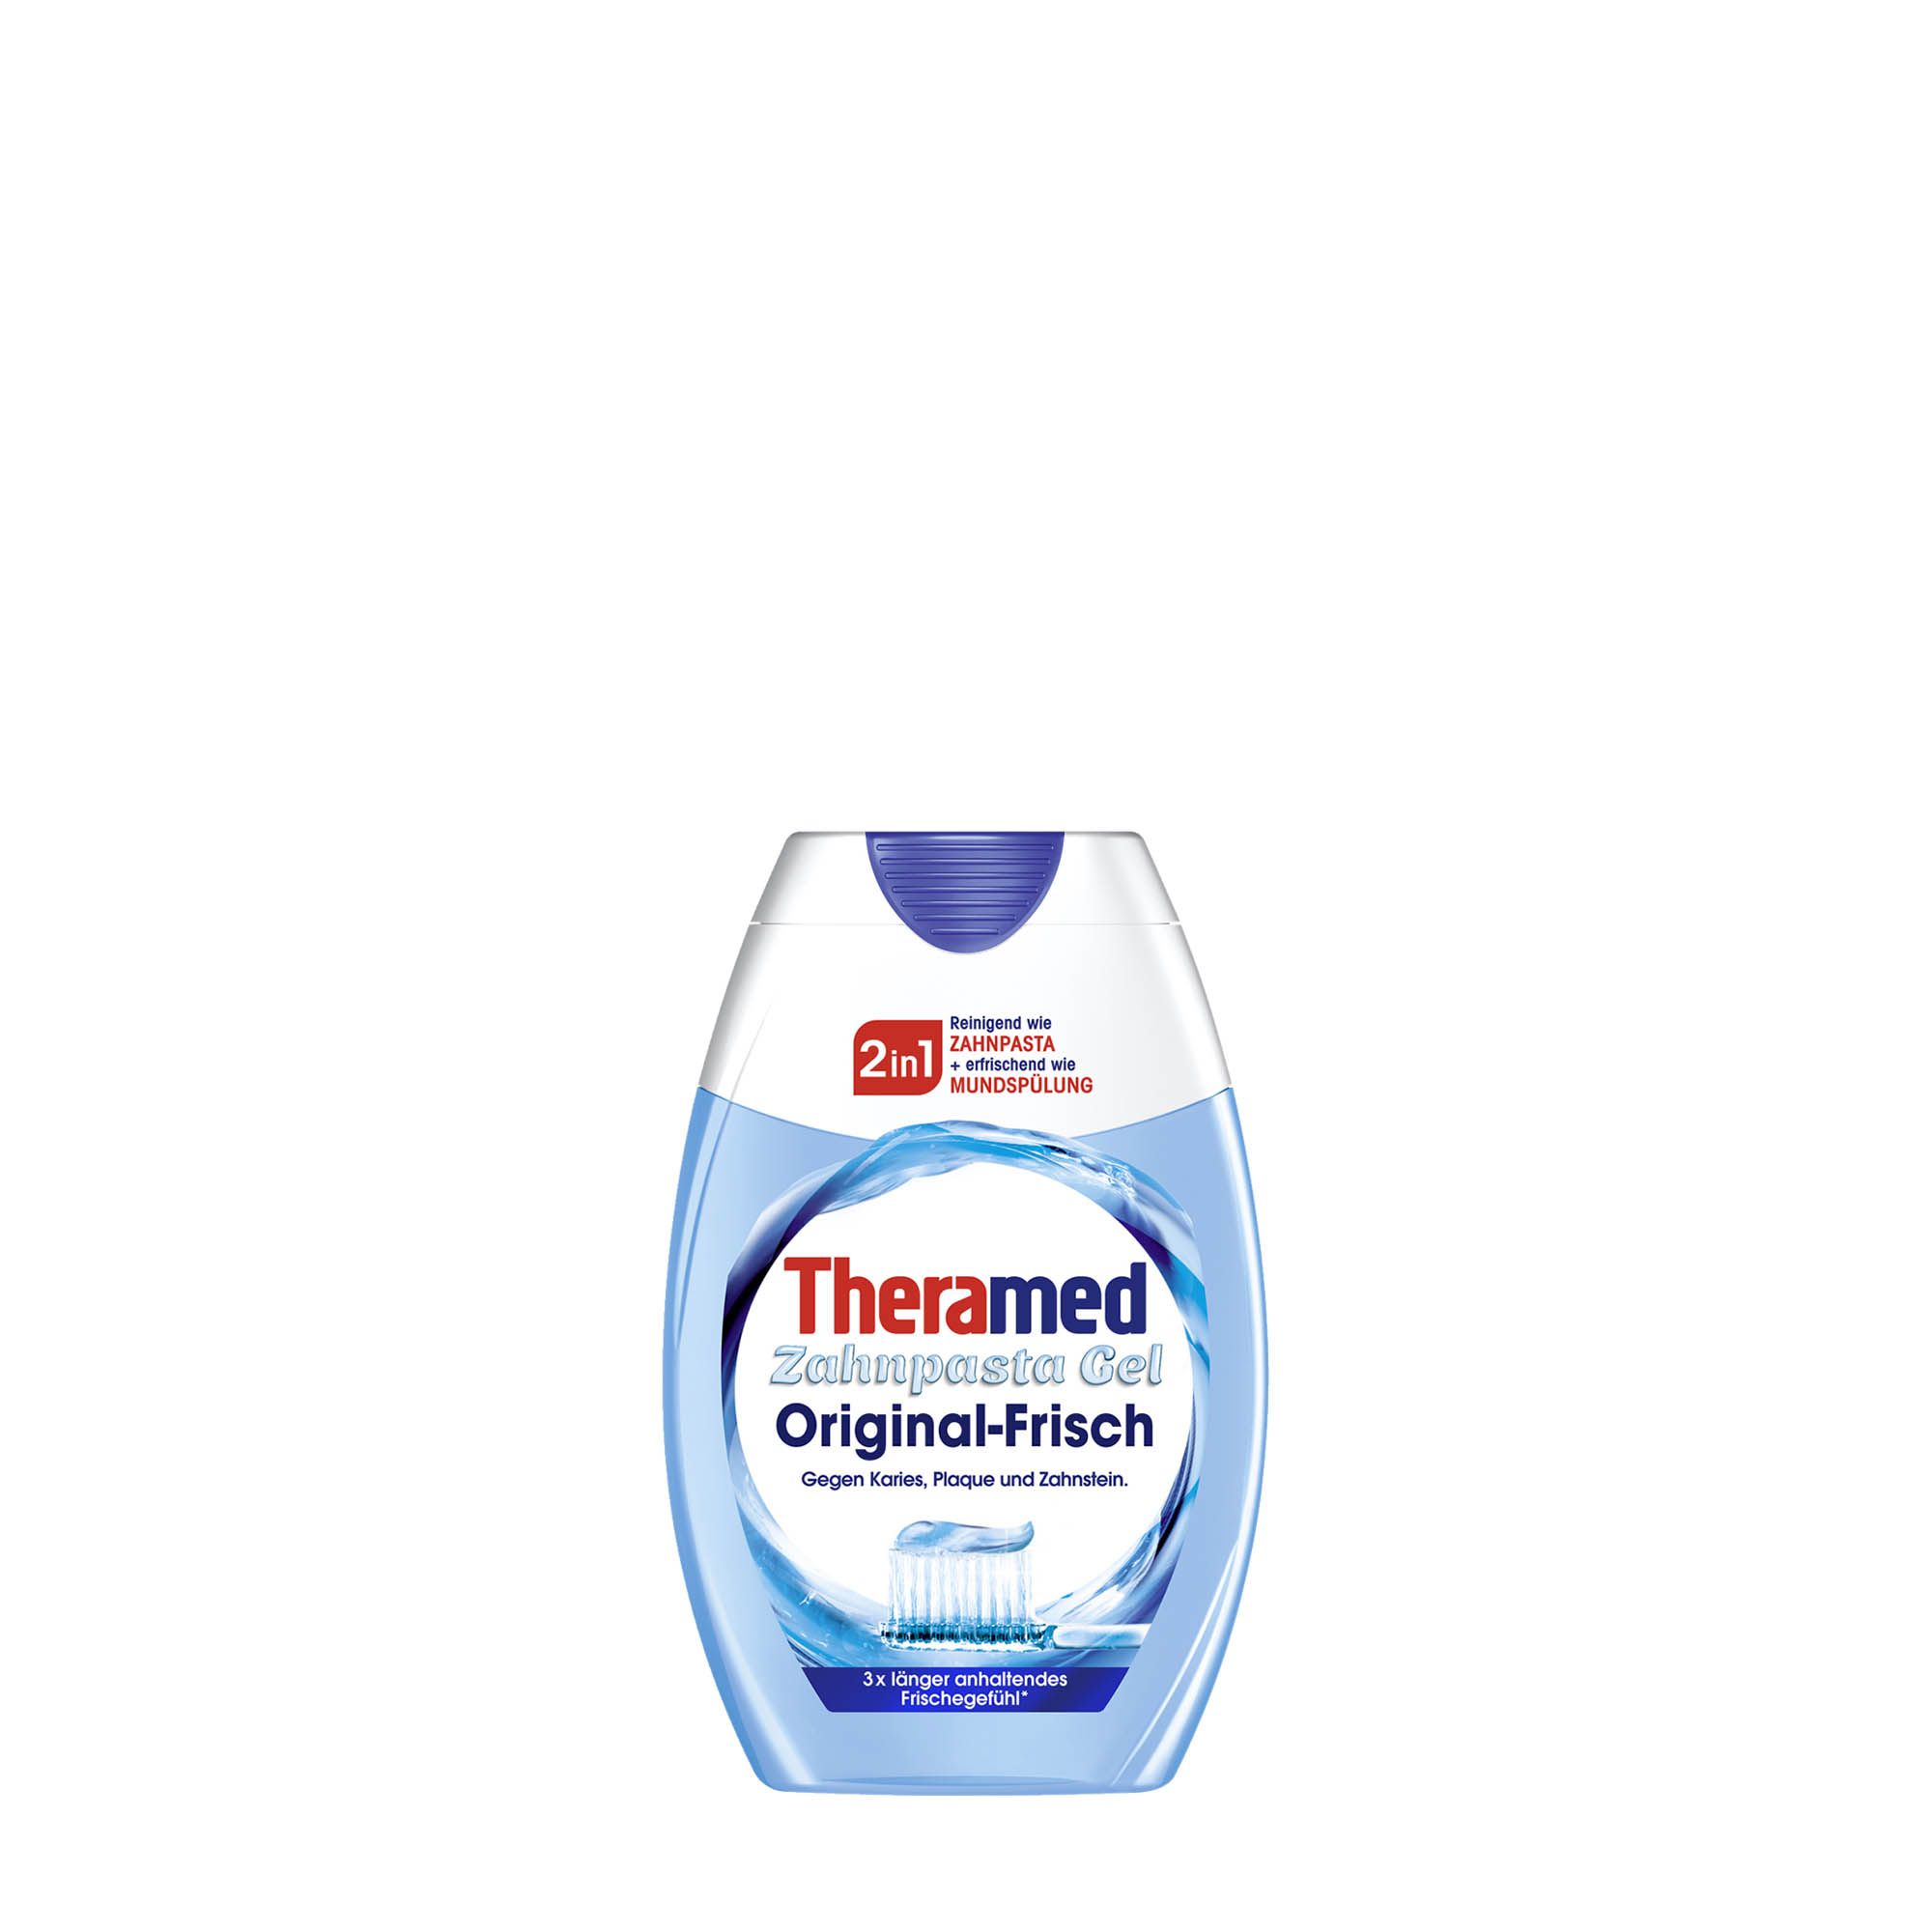 https://pepperyspot.com/wp-content/uploads/2021/12/theramed-toothpaste-gel-2-in-1-original-fresh-75-ml.jpg